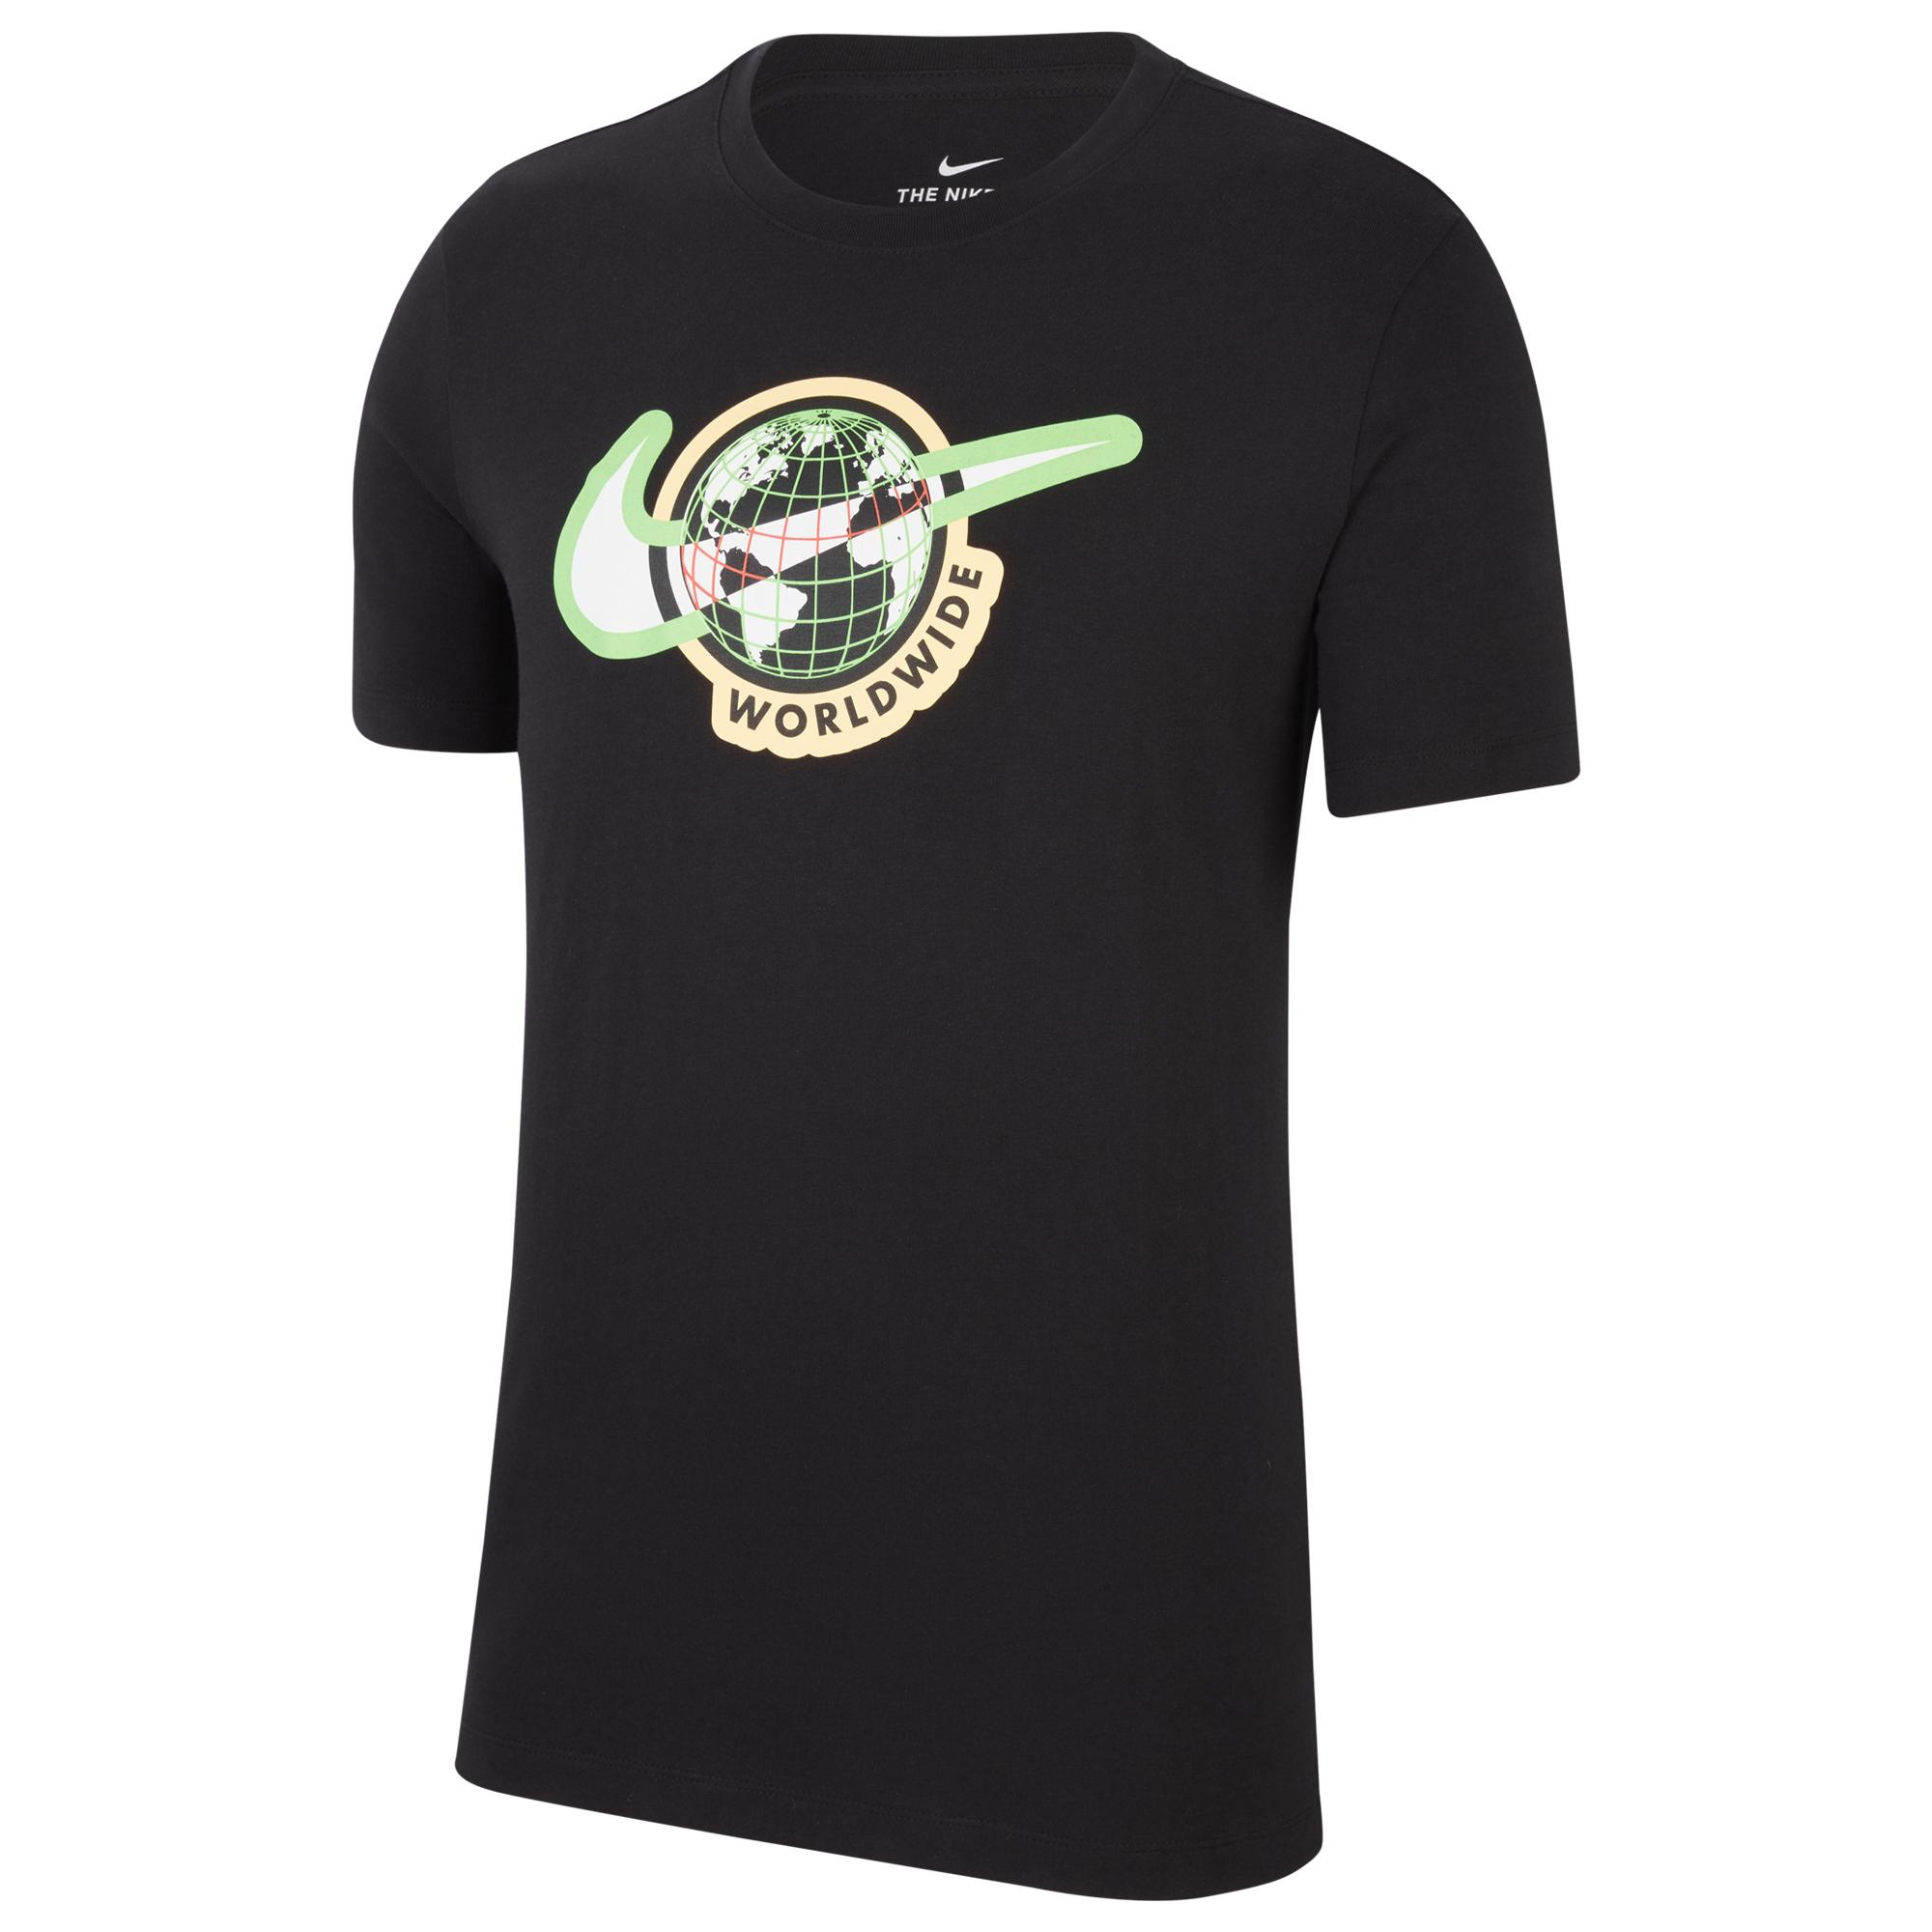 Nike Cotton Worldwide Swoosh T-shirt in Black/Green (Black) for Men - Lyst